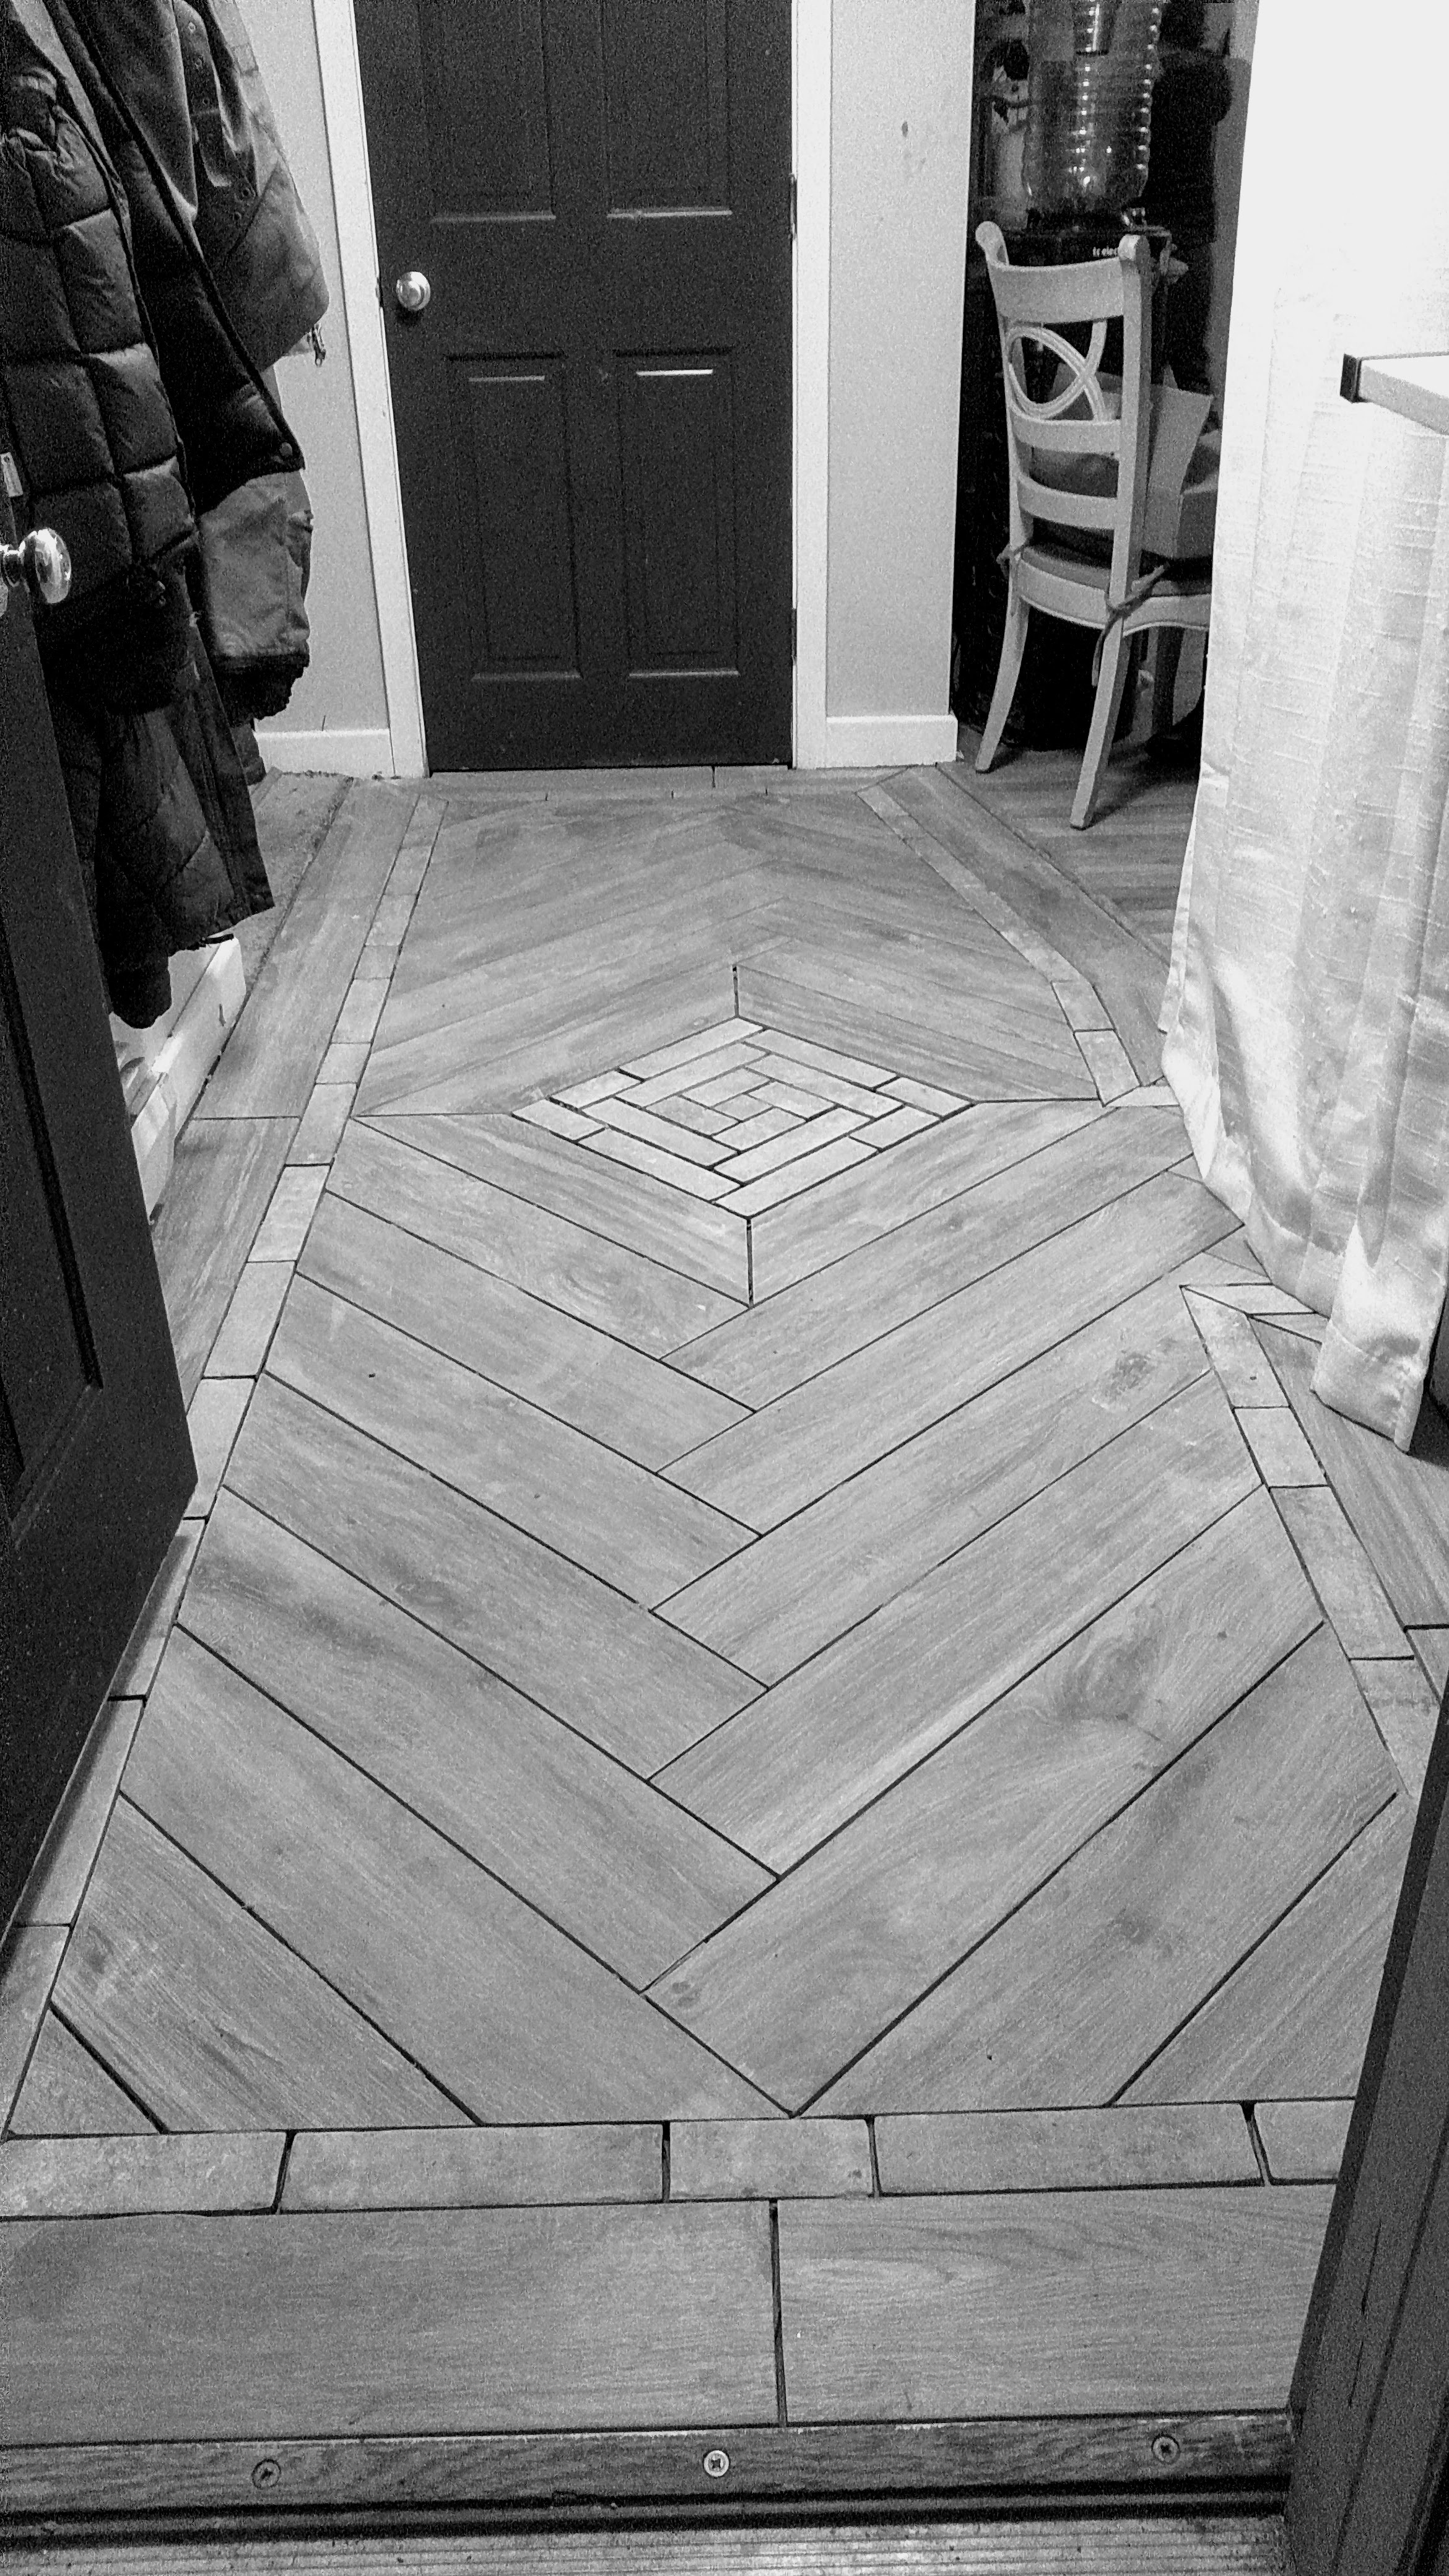 Tile floor installation for mud room floor